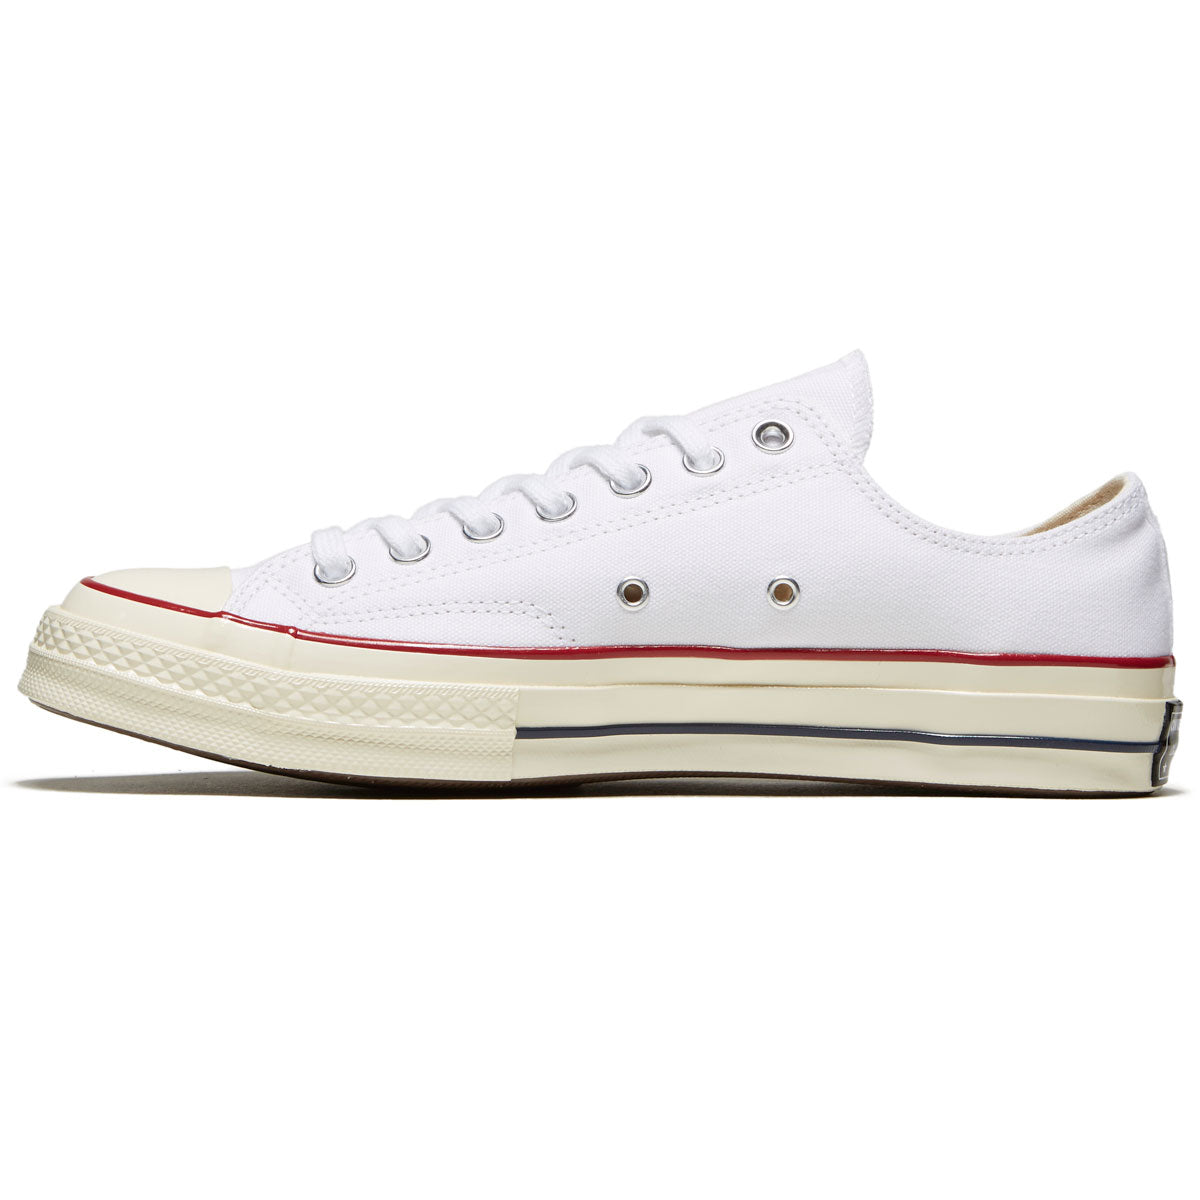 Converse Chuck 70 Ox Shoes - White/Garnet/Egret image 2